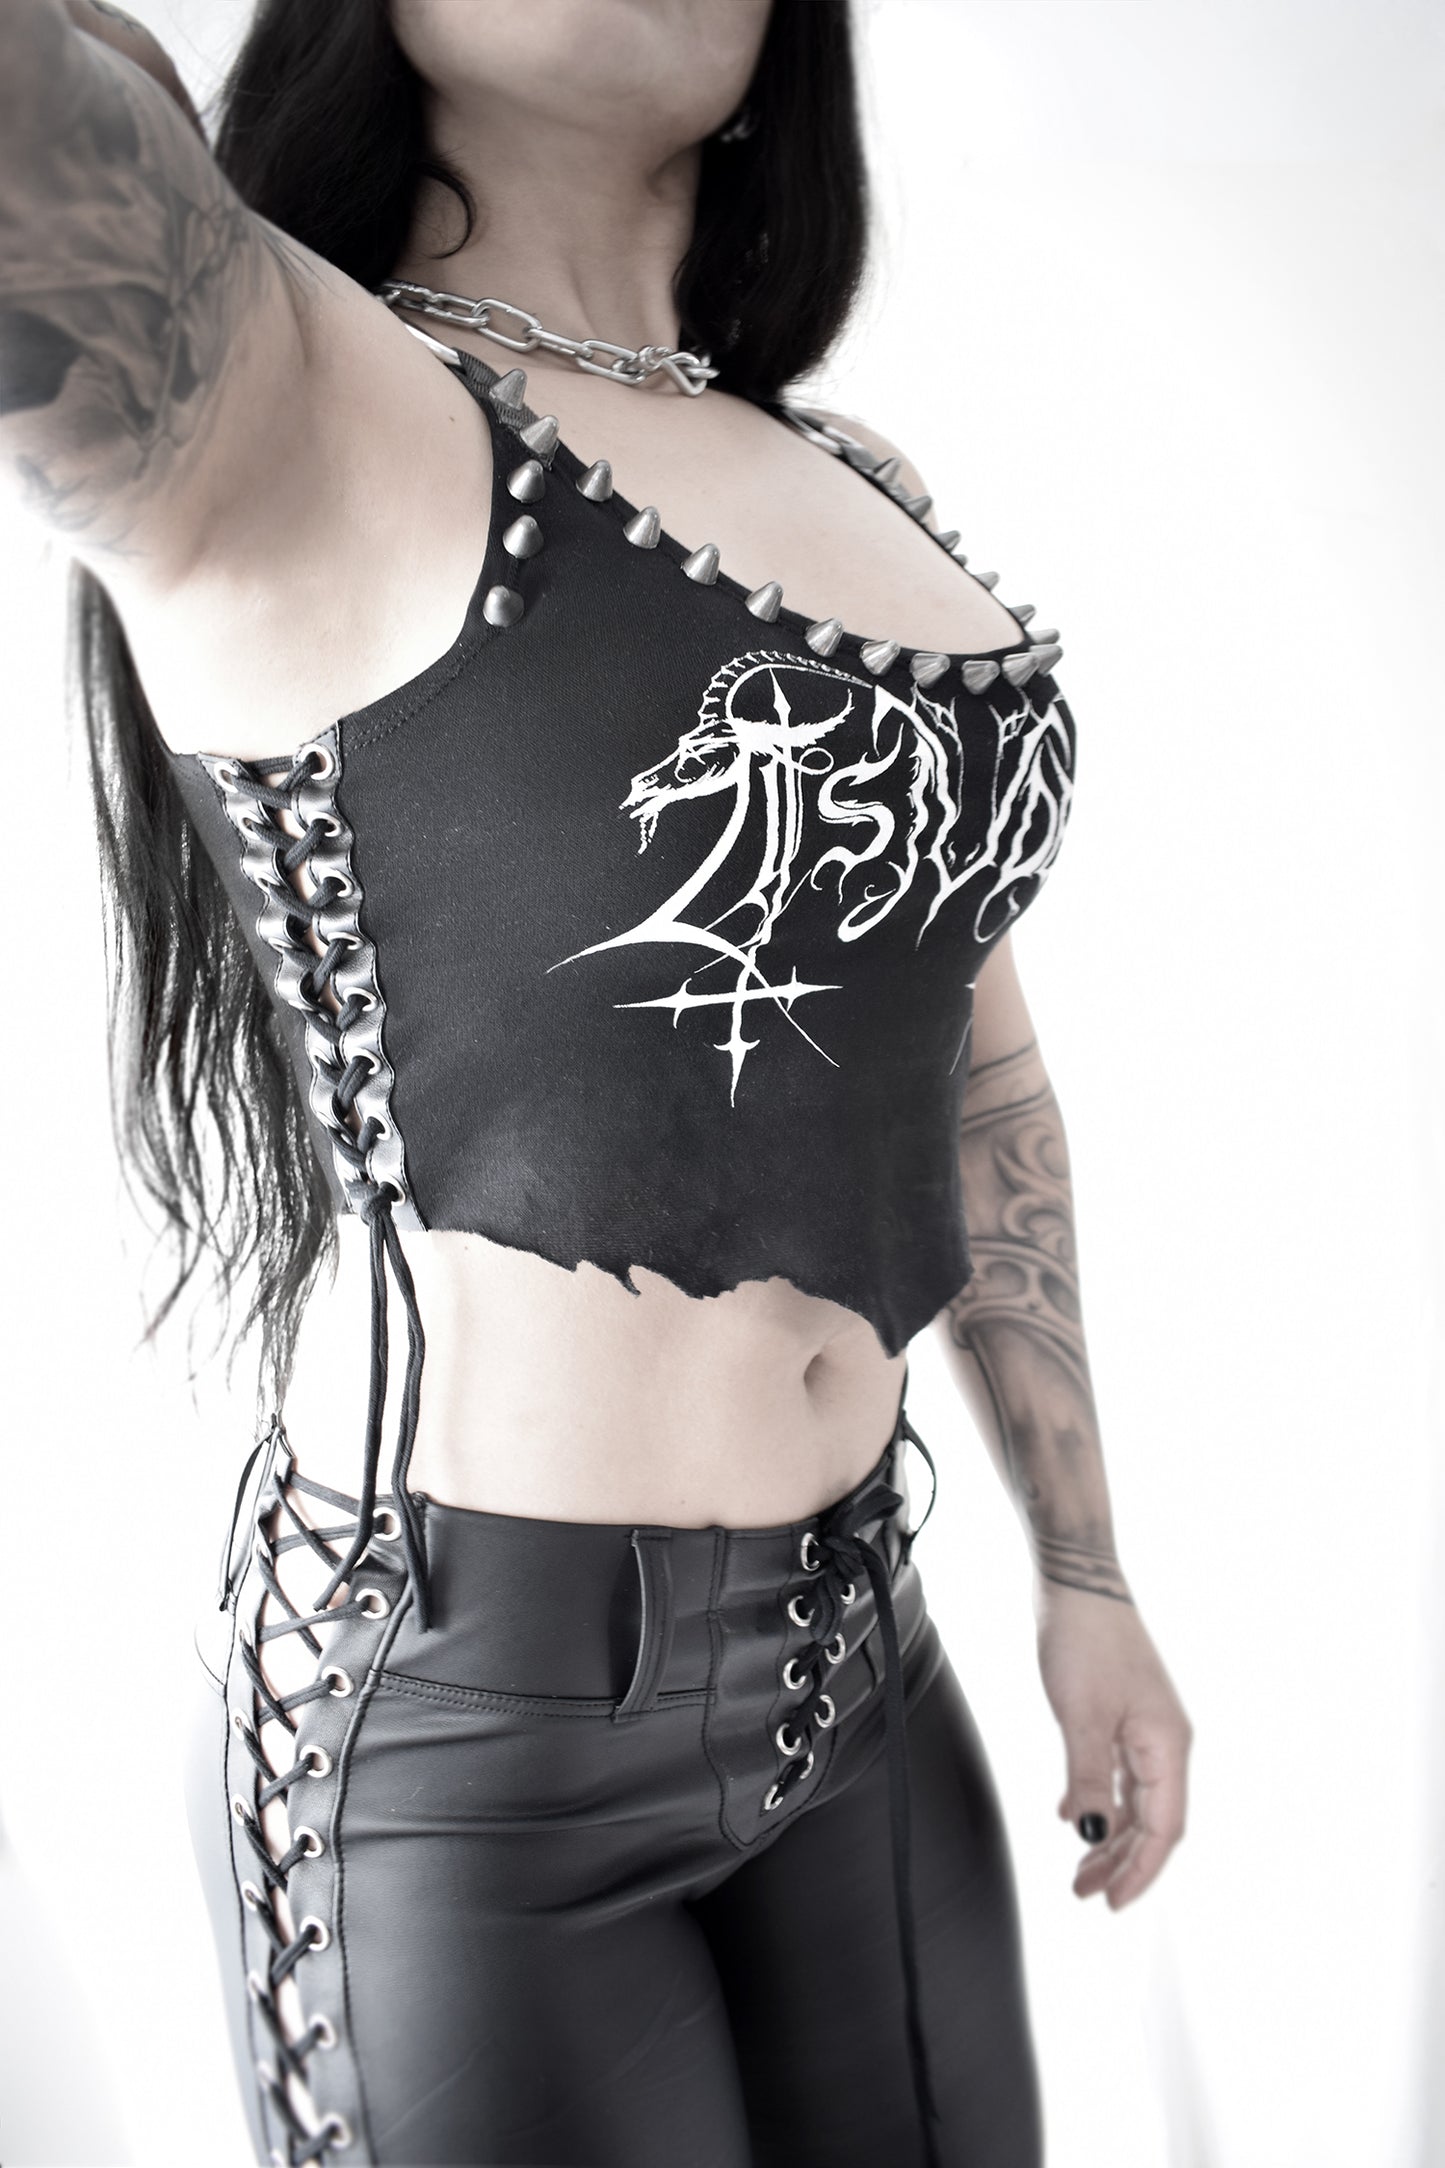 Tsjuder top cropped ⇹ black metal ⇹ shredded shirt top